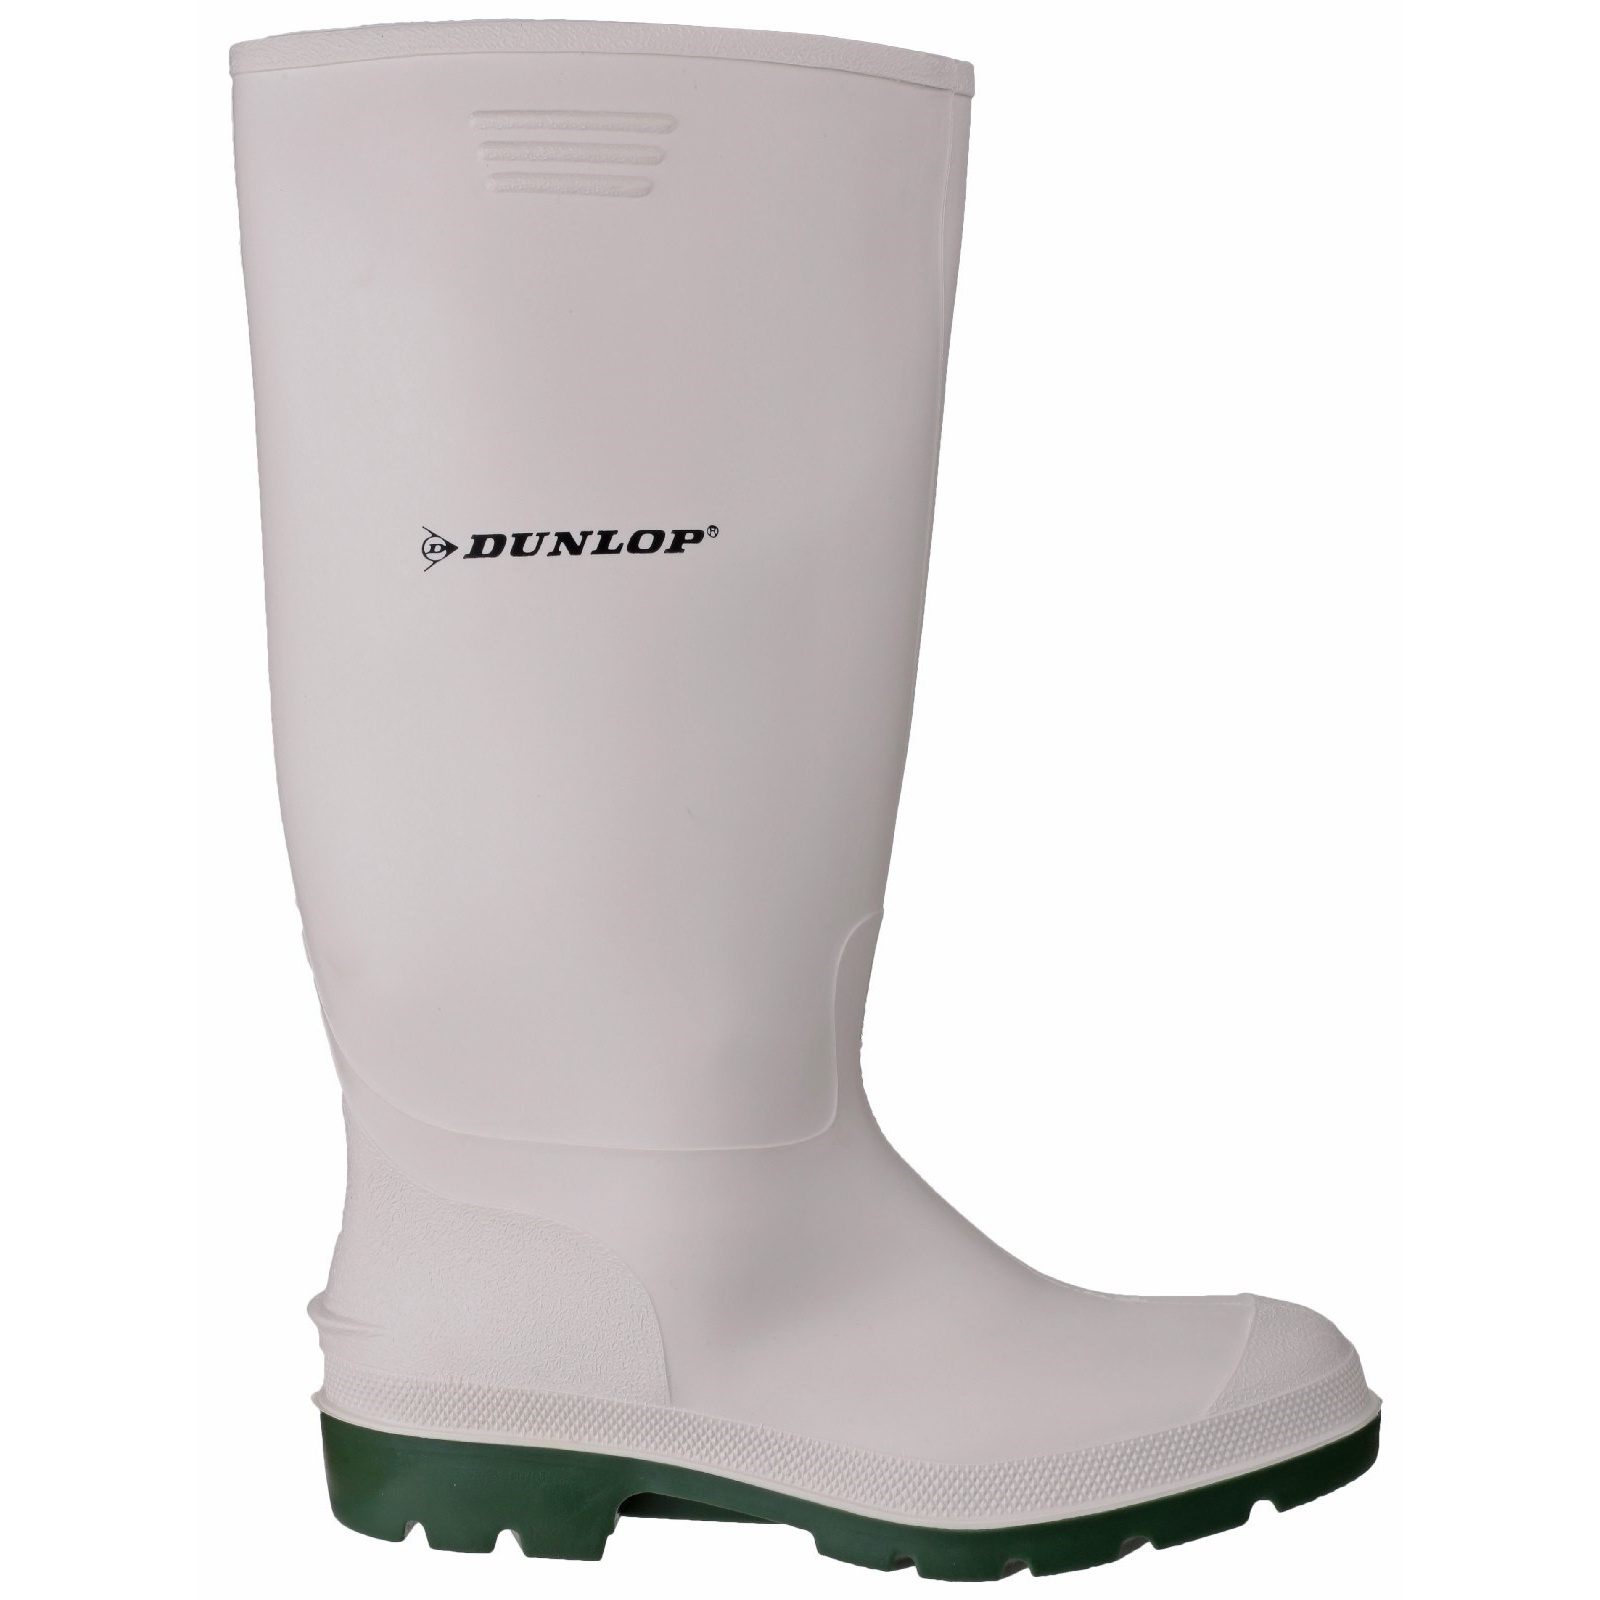 Mens 380bv Wellington Boots Dunlop Pricemastor - blanco-verde - 